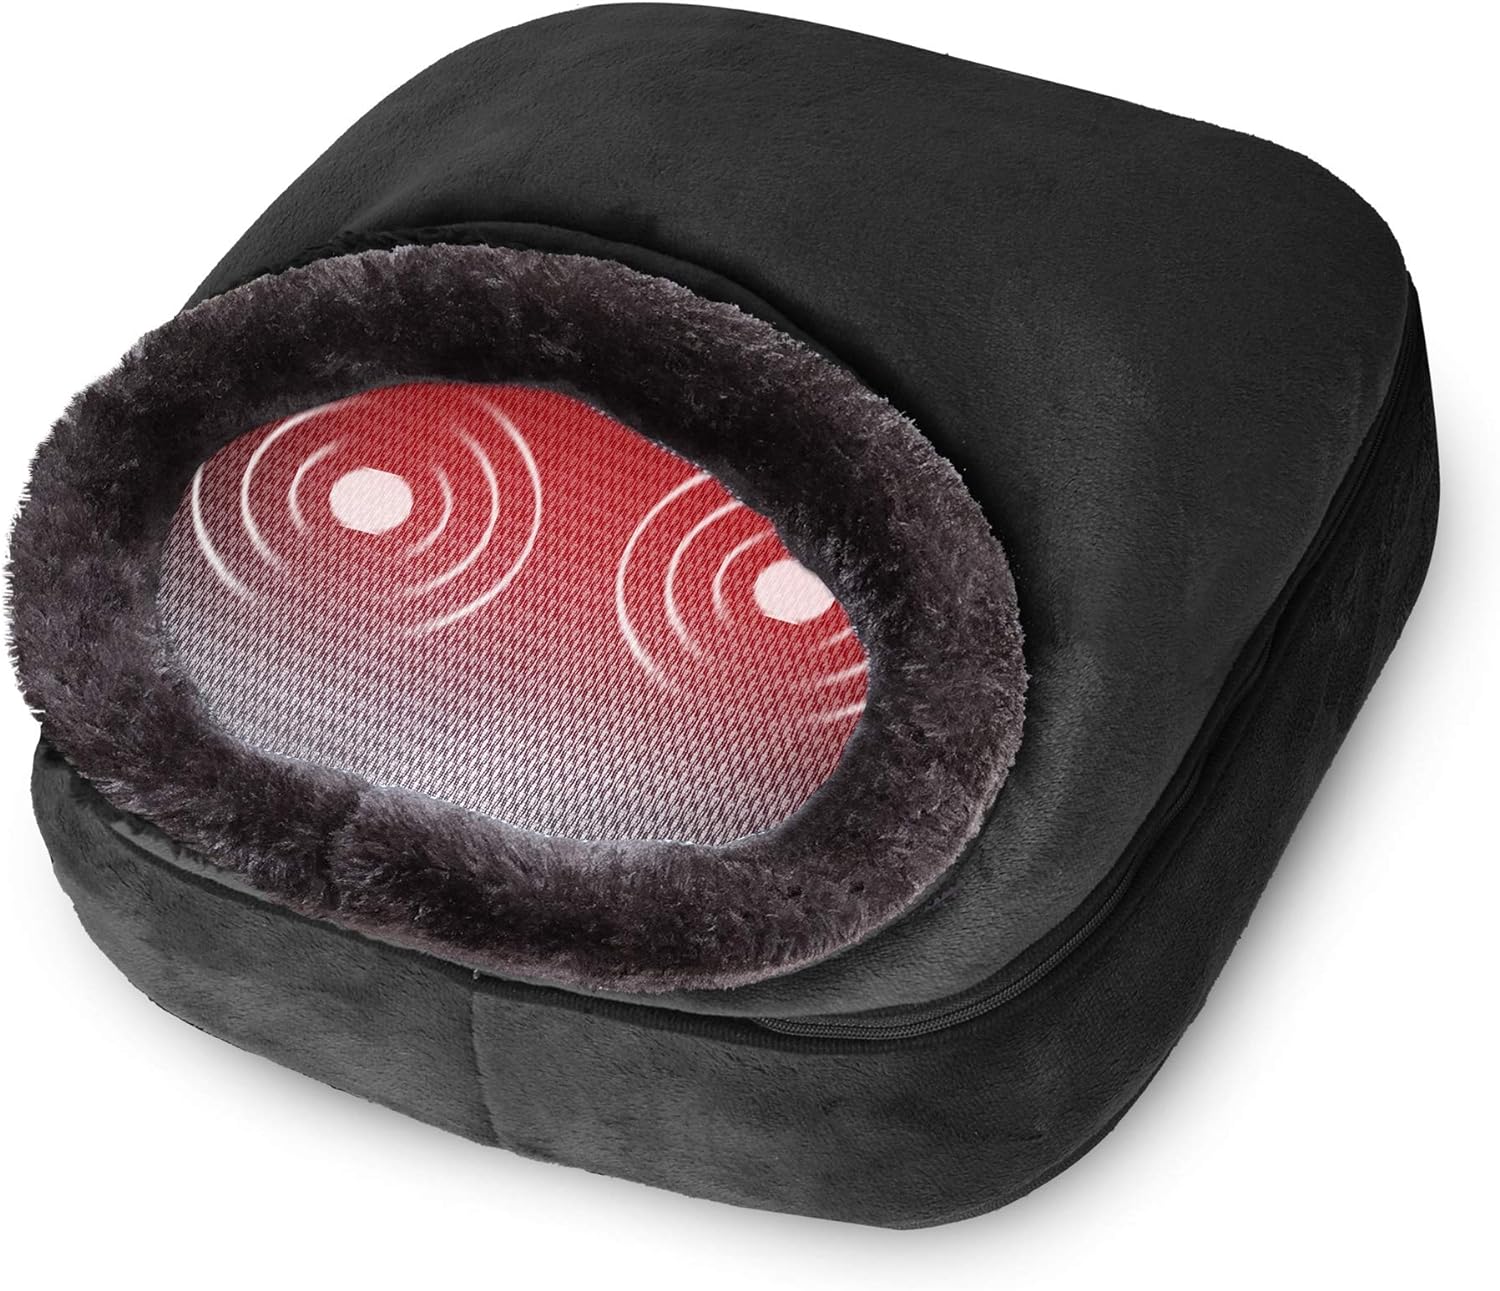 Oprigtighed Rejsebureau Syd Electric Foot Feet heat Warmer with Massage Vibration & back Heating Cushion  pad | eBay